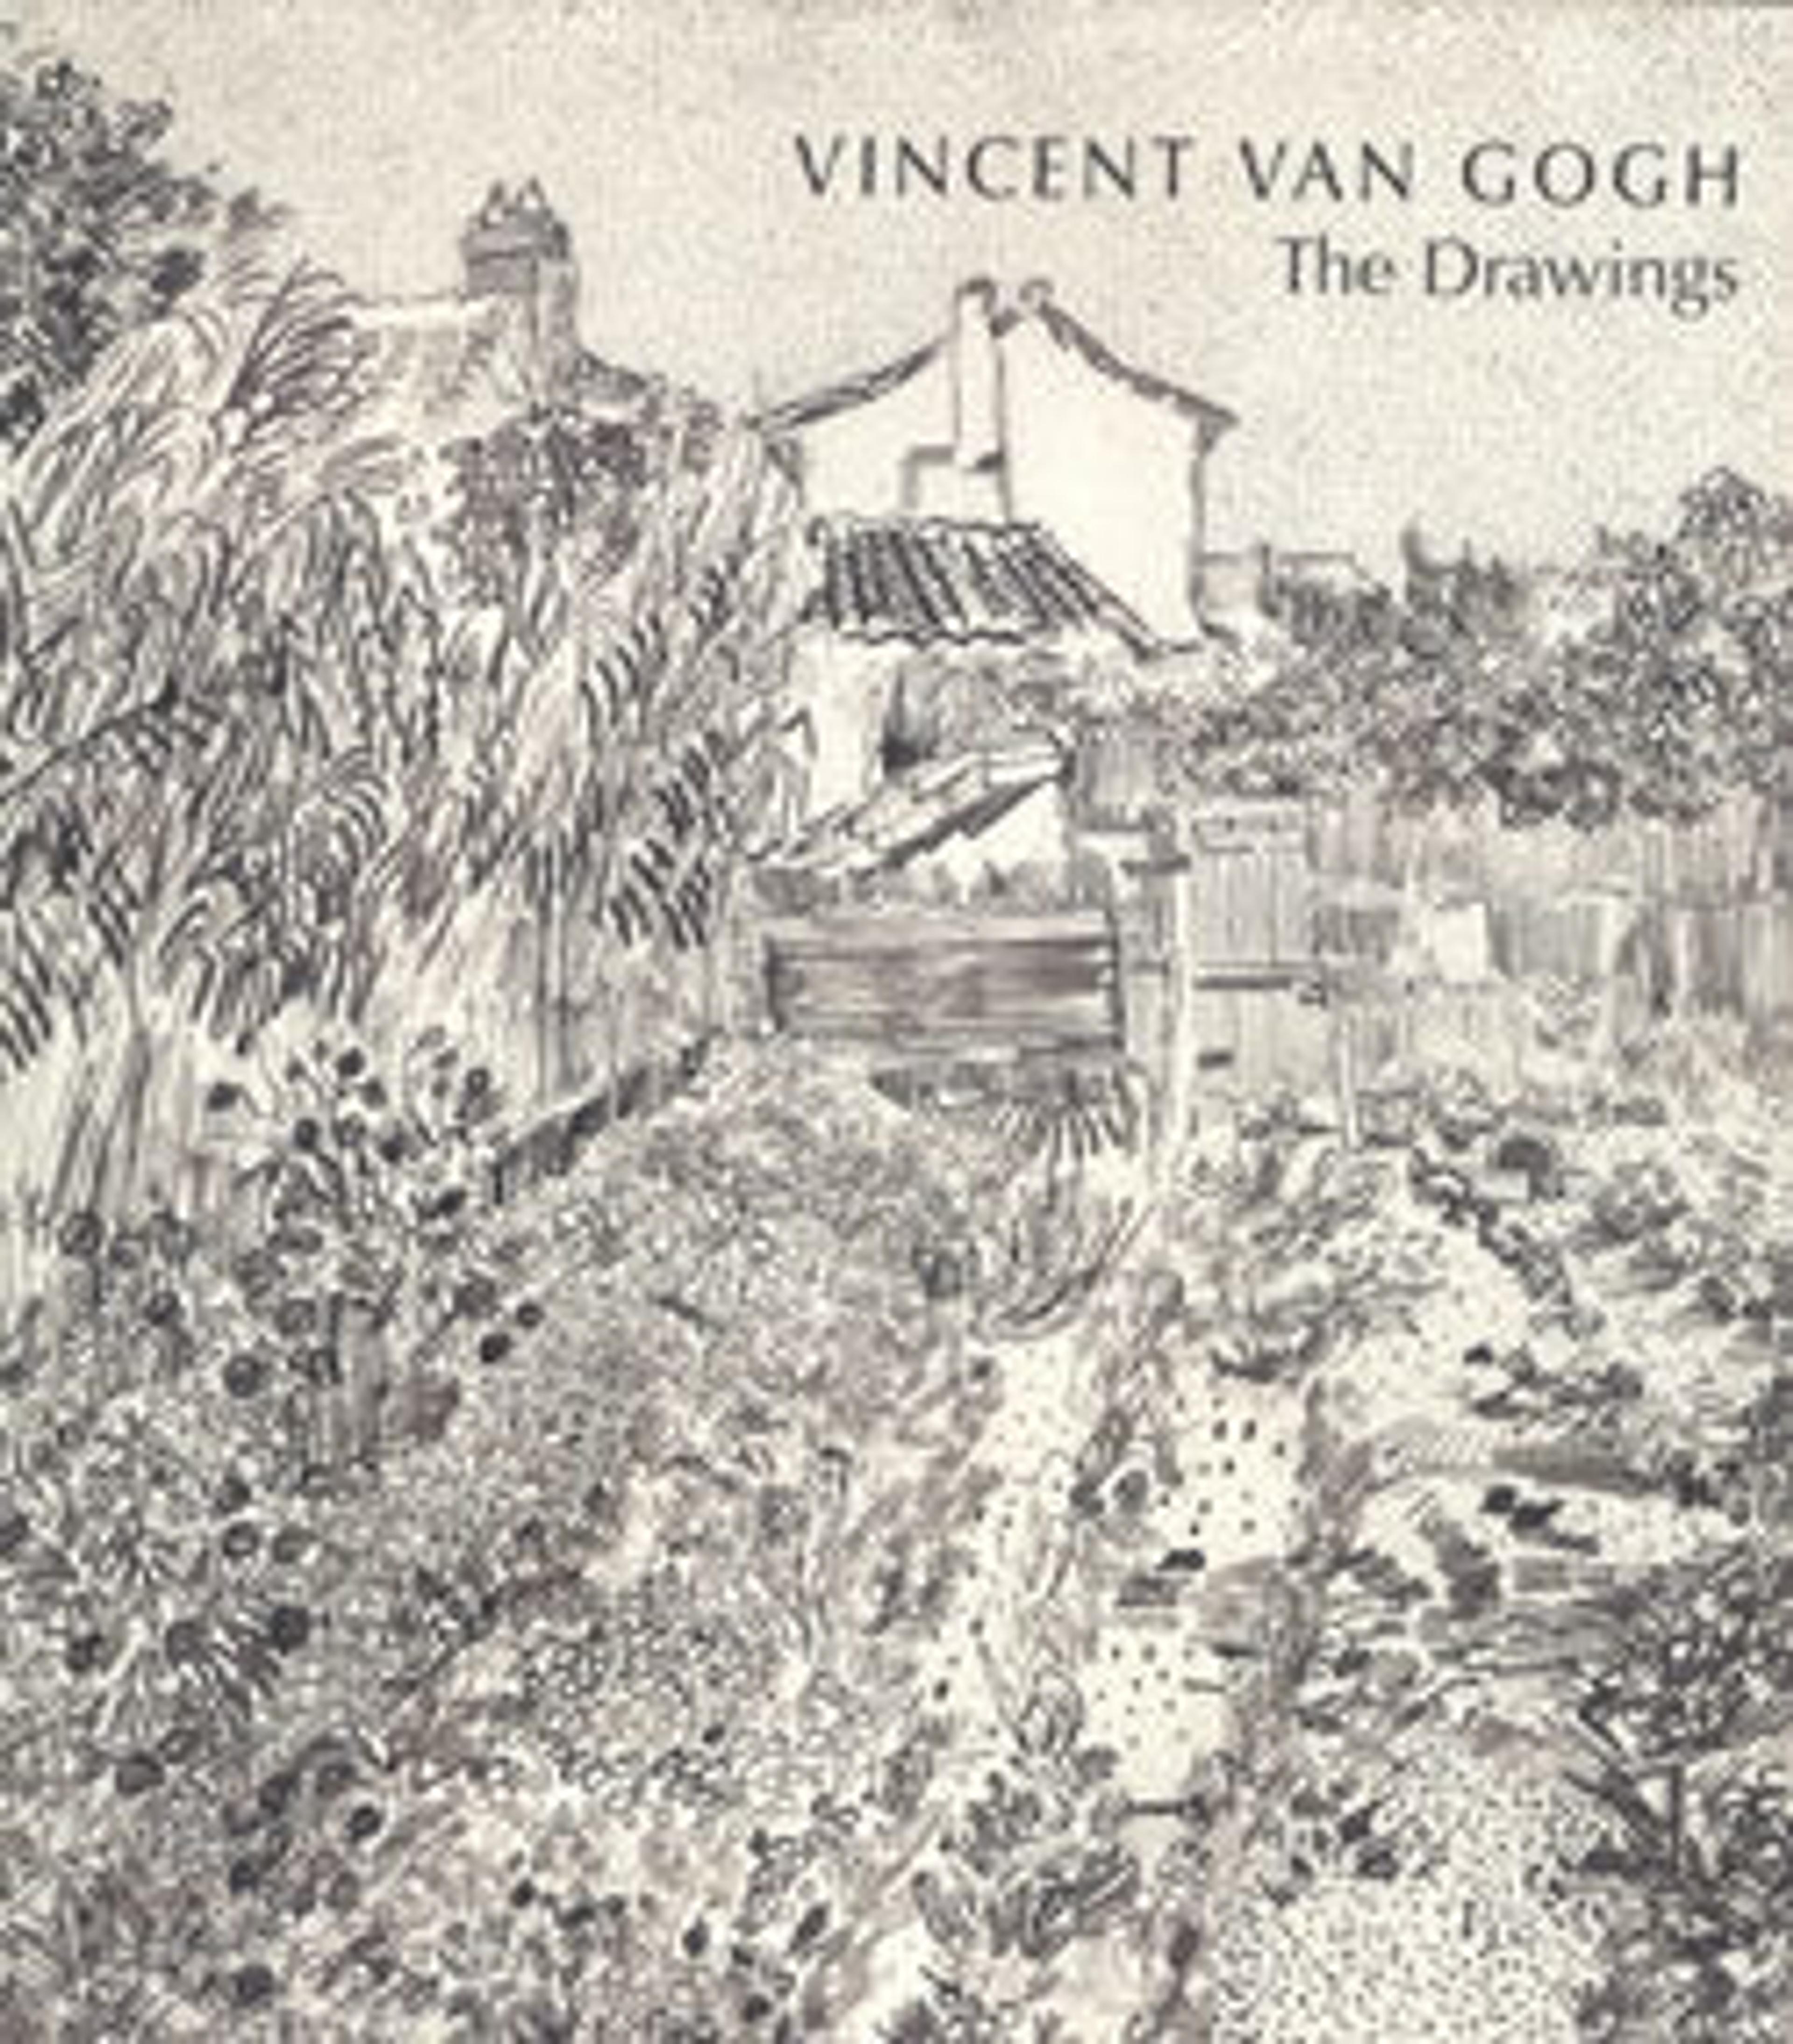 Vincent van Gogh: The Drawings